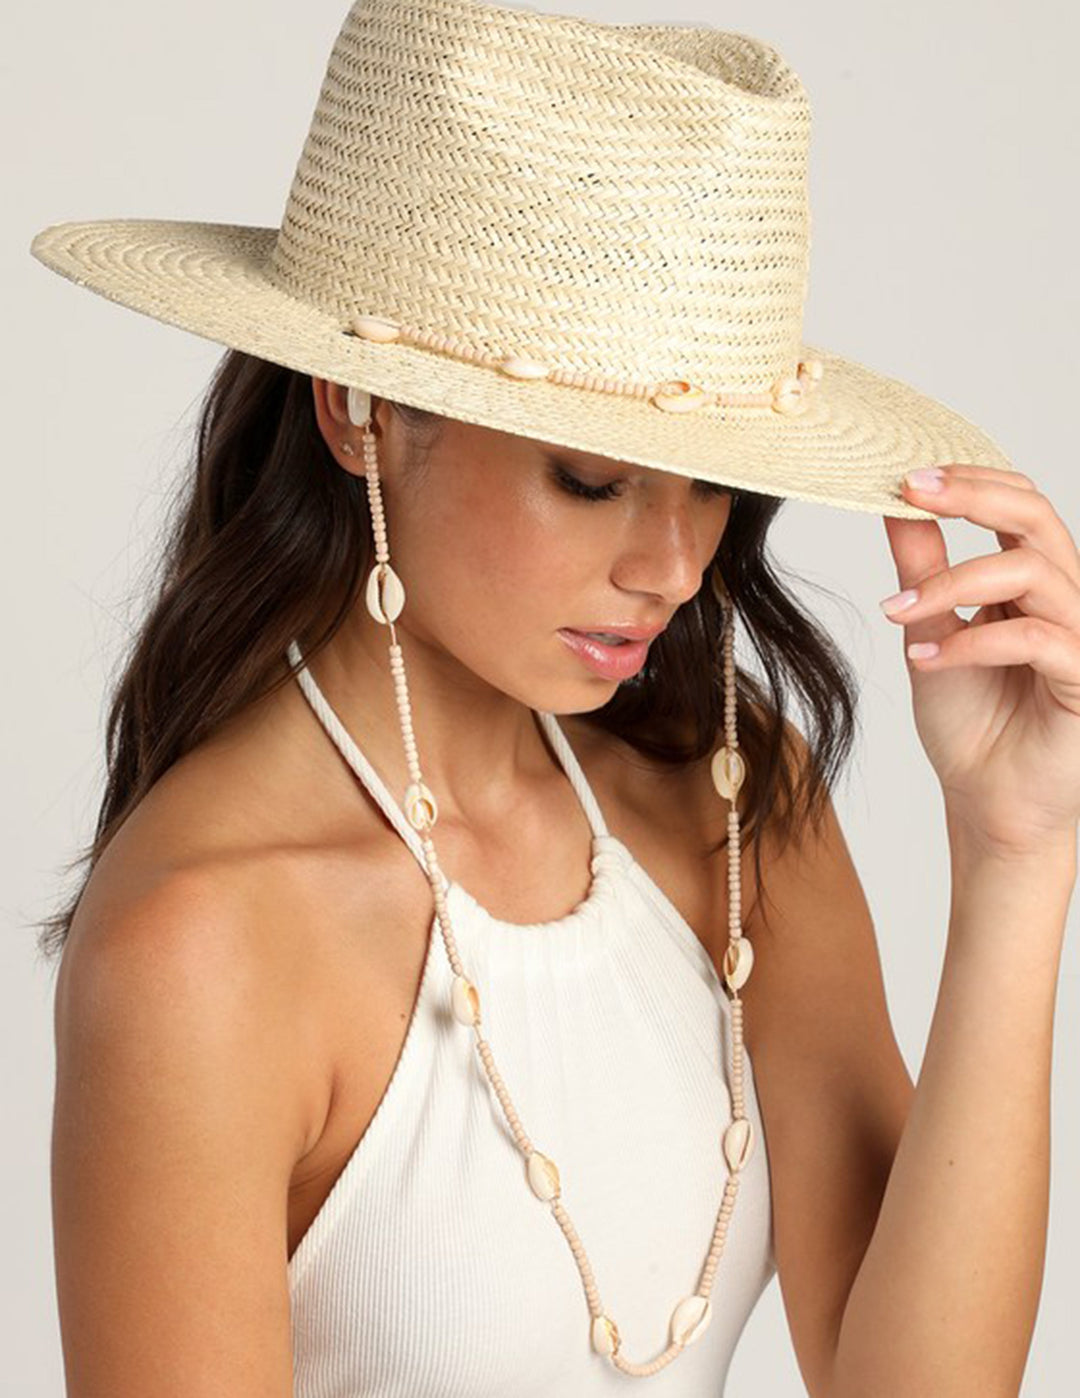 Seashells Natural Straw Fedora Hat